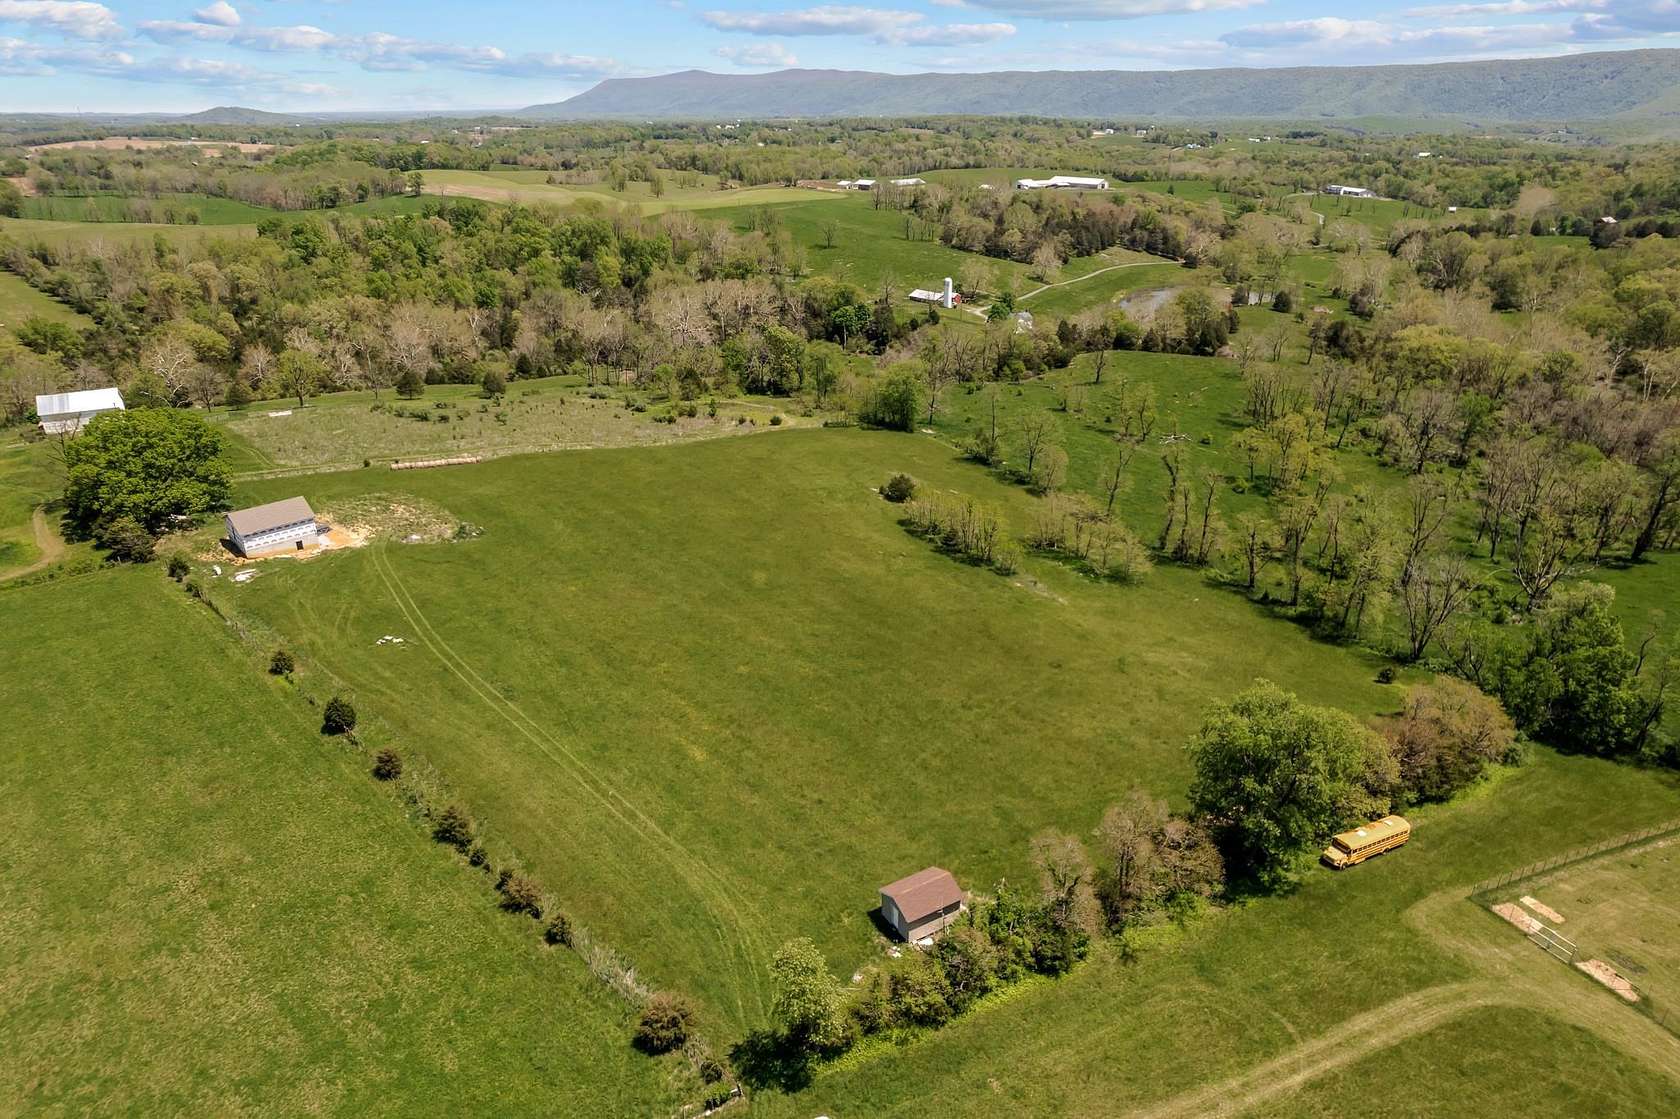 6.7 Acres of Residential Land for Sale in Woodstock, Virginia